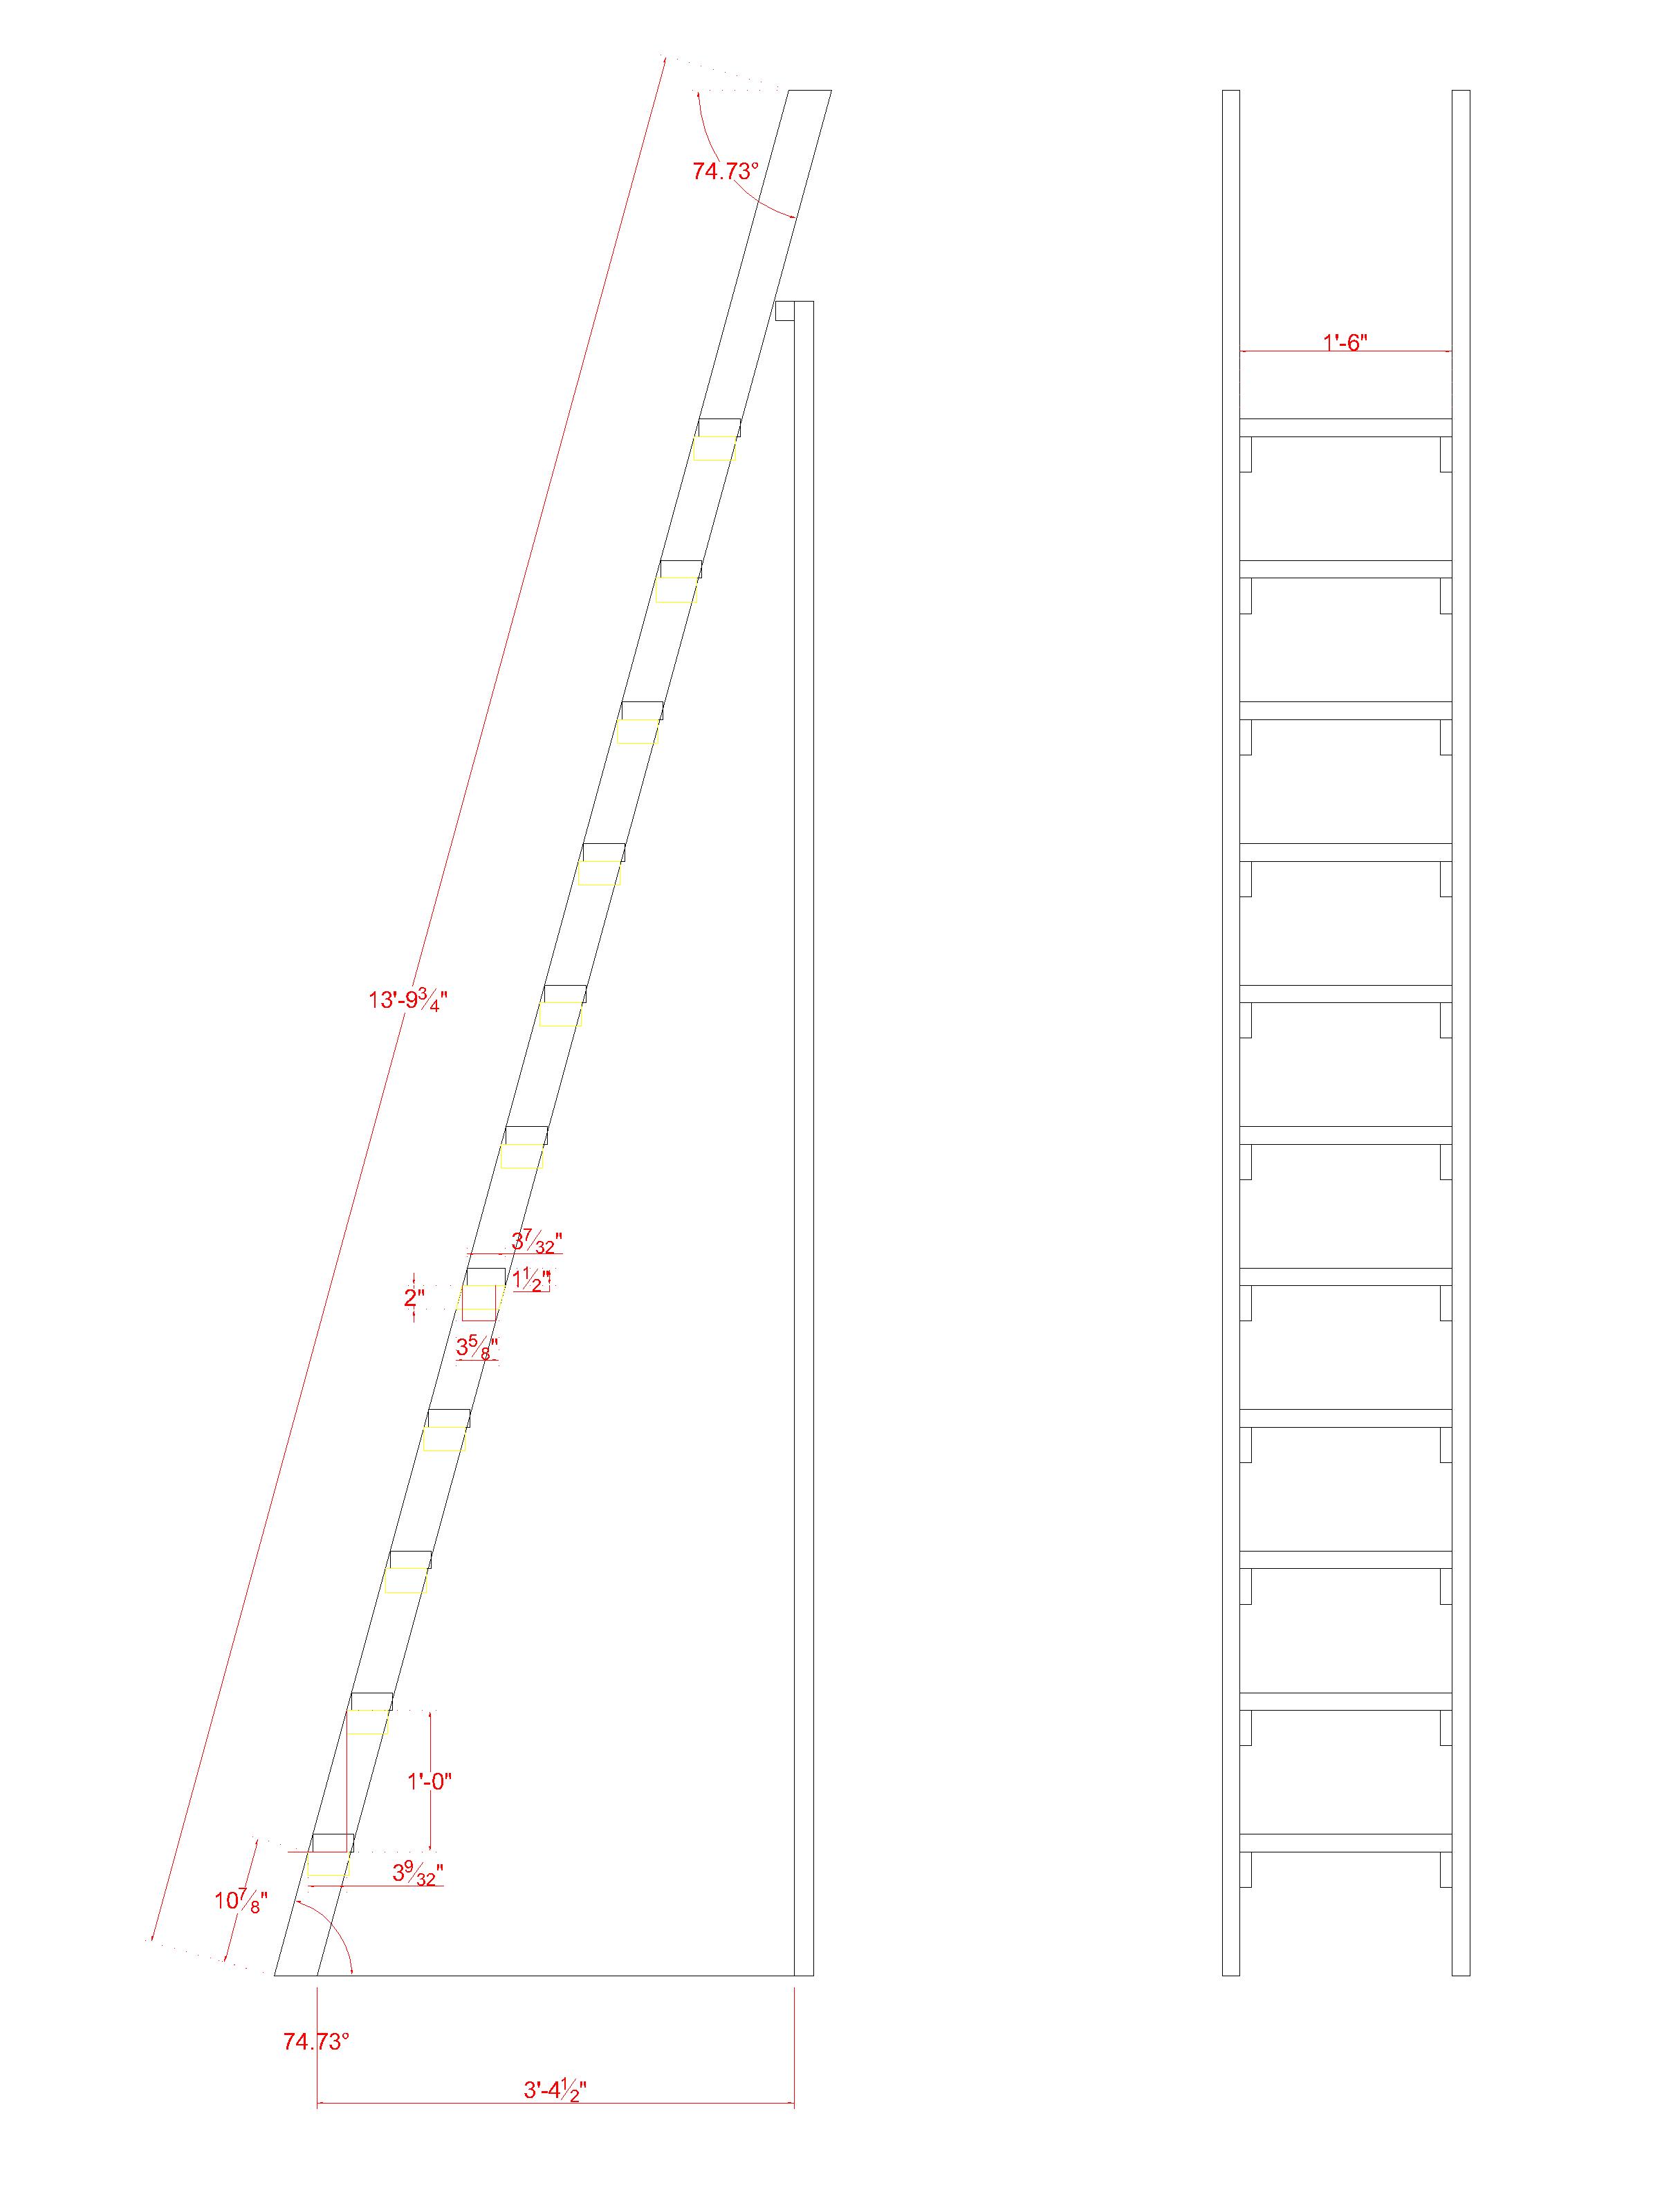  Ladder drafting mockup by Jon West. 